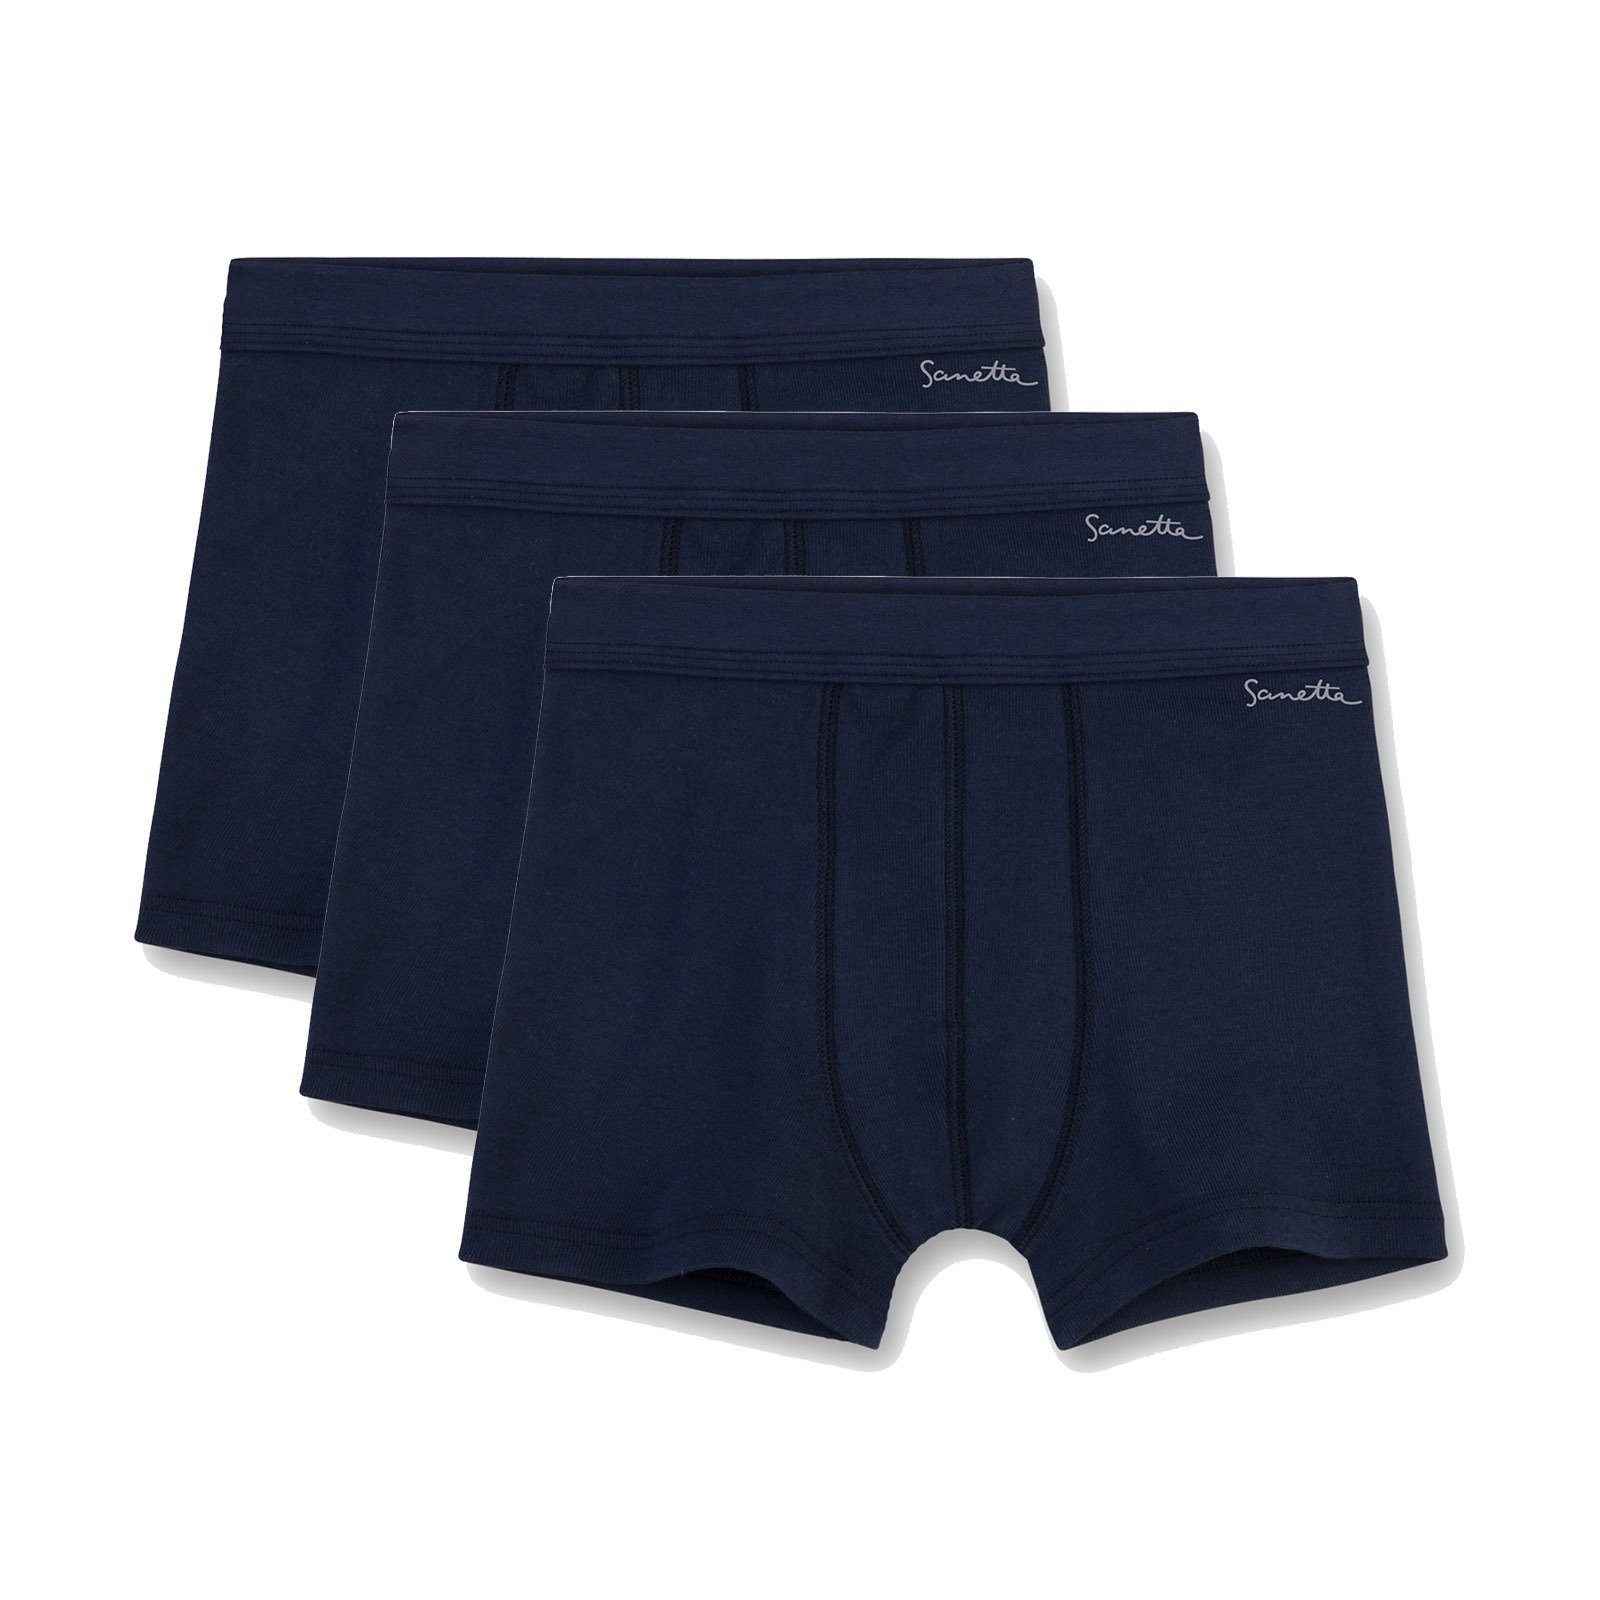 Sanetta Boxer Jungen Shorts 3er Pack - Pant, Unterhose, Organic Blau